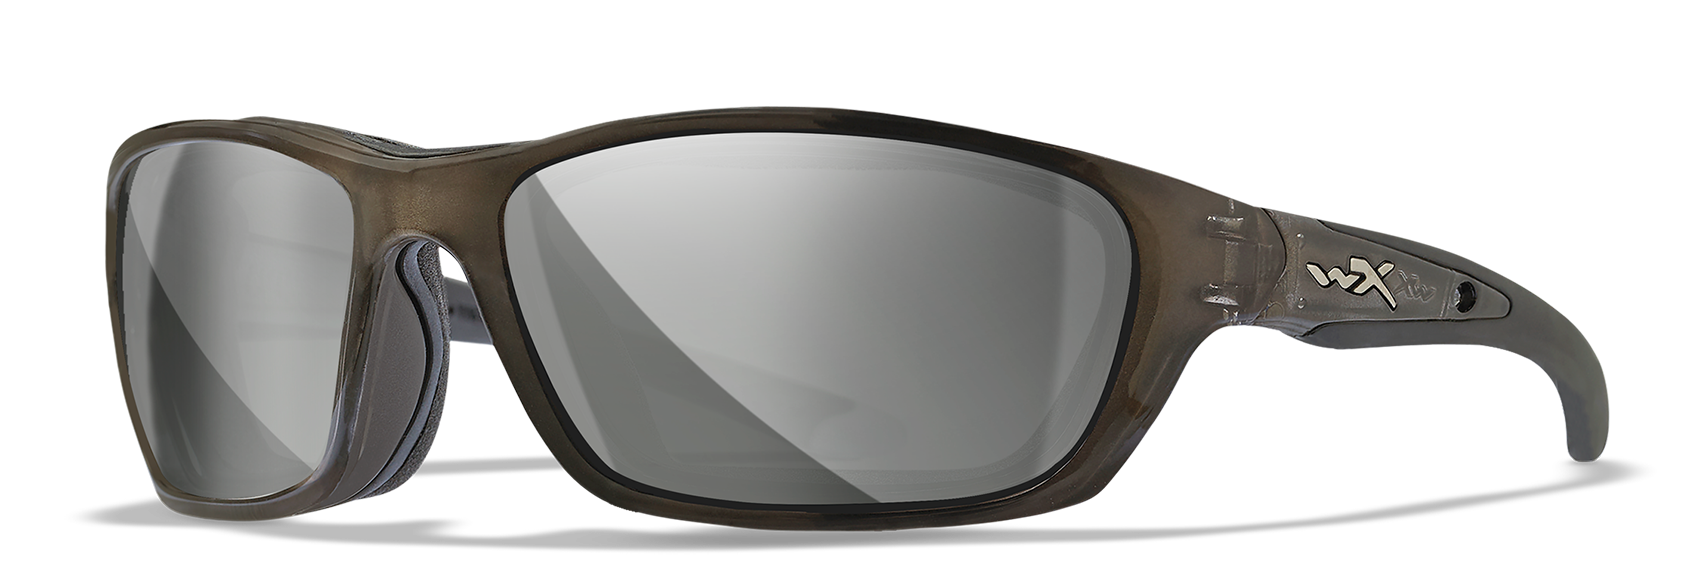 Wiley X BRICK Oval Sunglasses  Cyrstal Metallic 63-18-120